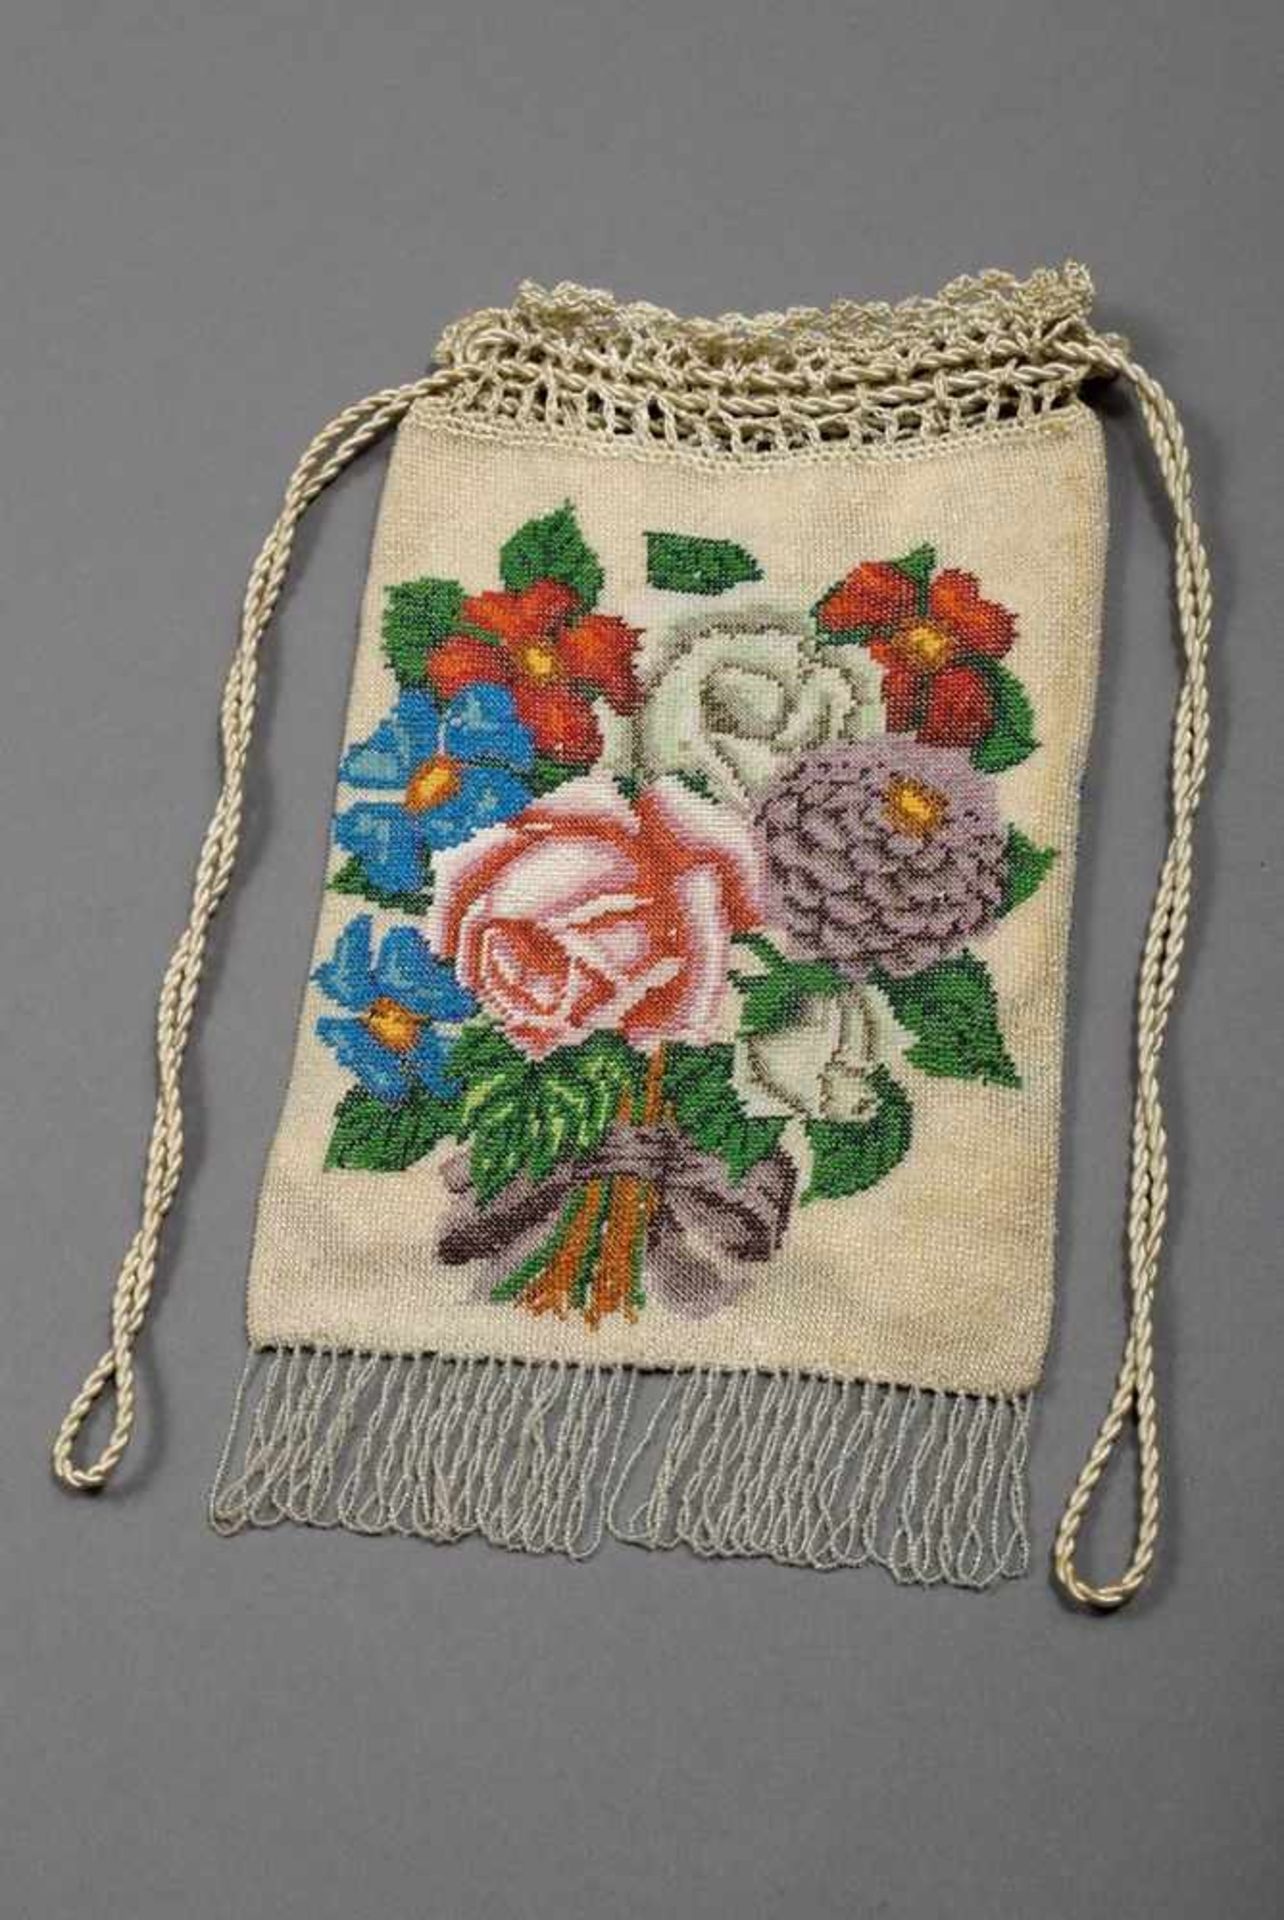 Beige Biedermeier pearl bag with floral decoration "flower bouquet", 26x15,5cm, small defects, - Image 2 of 4